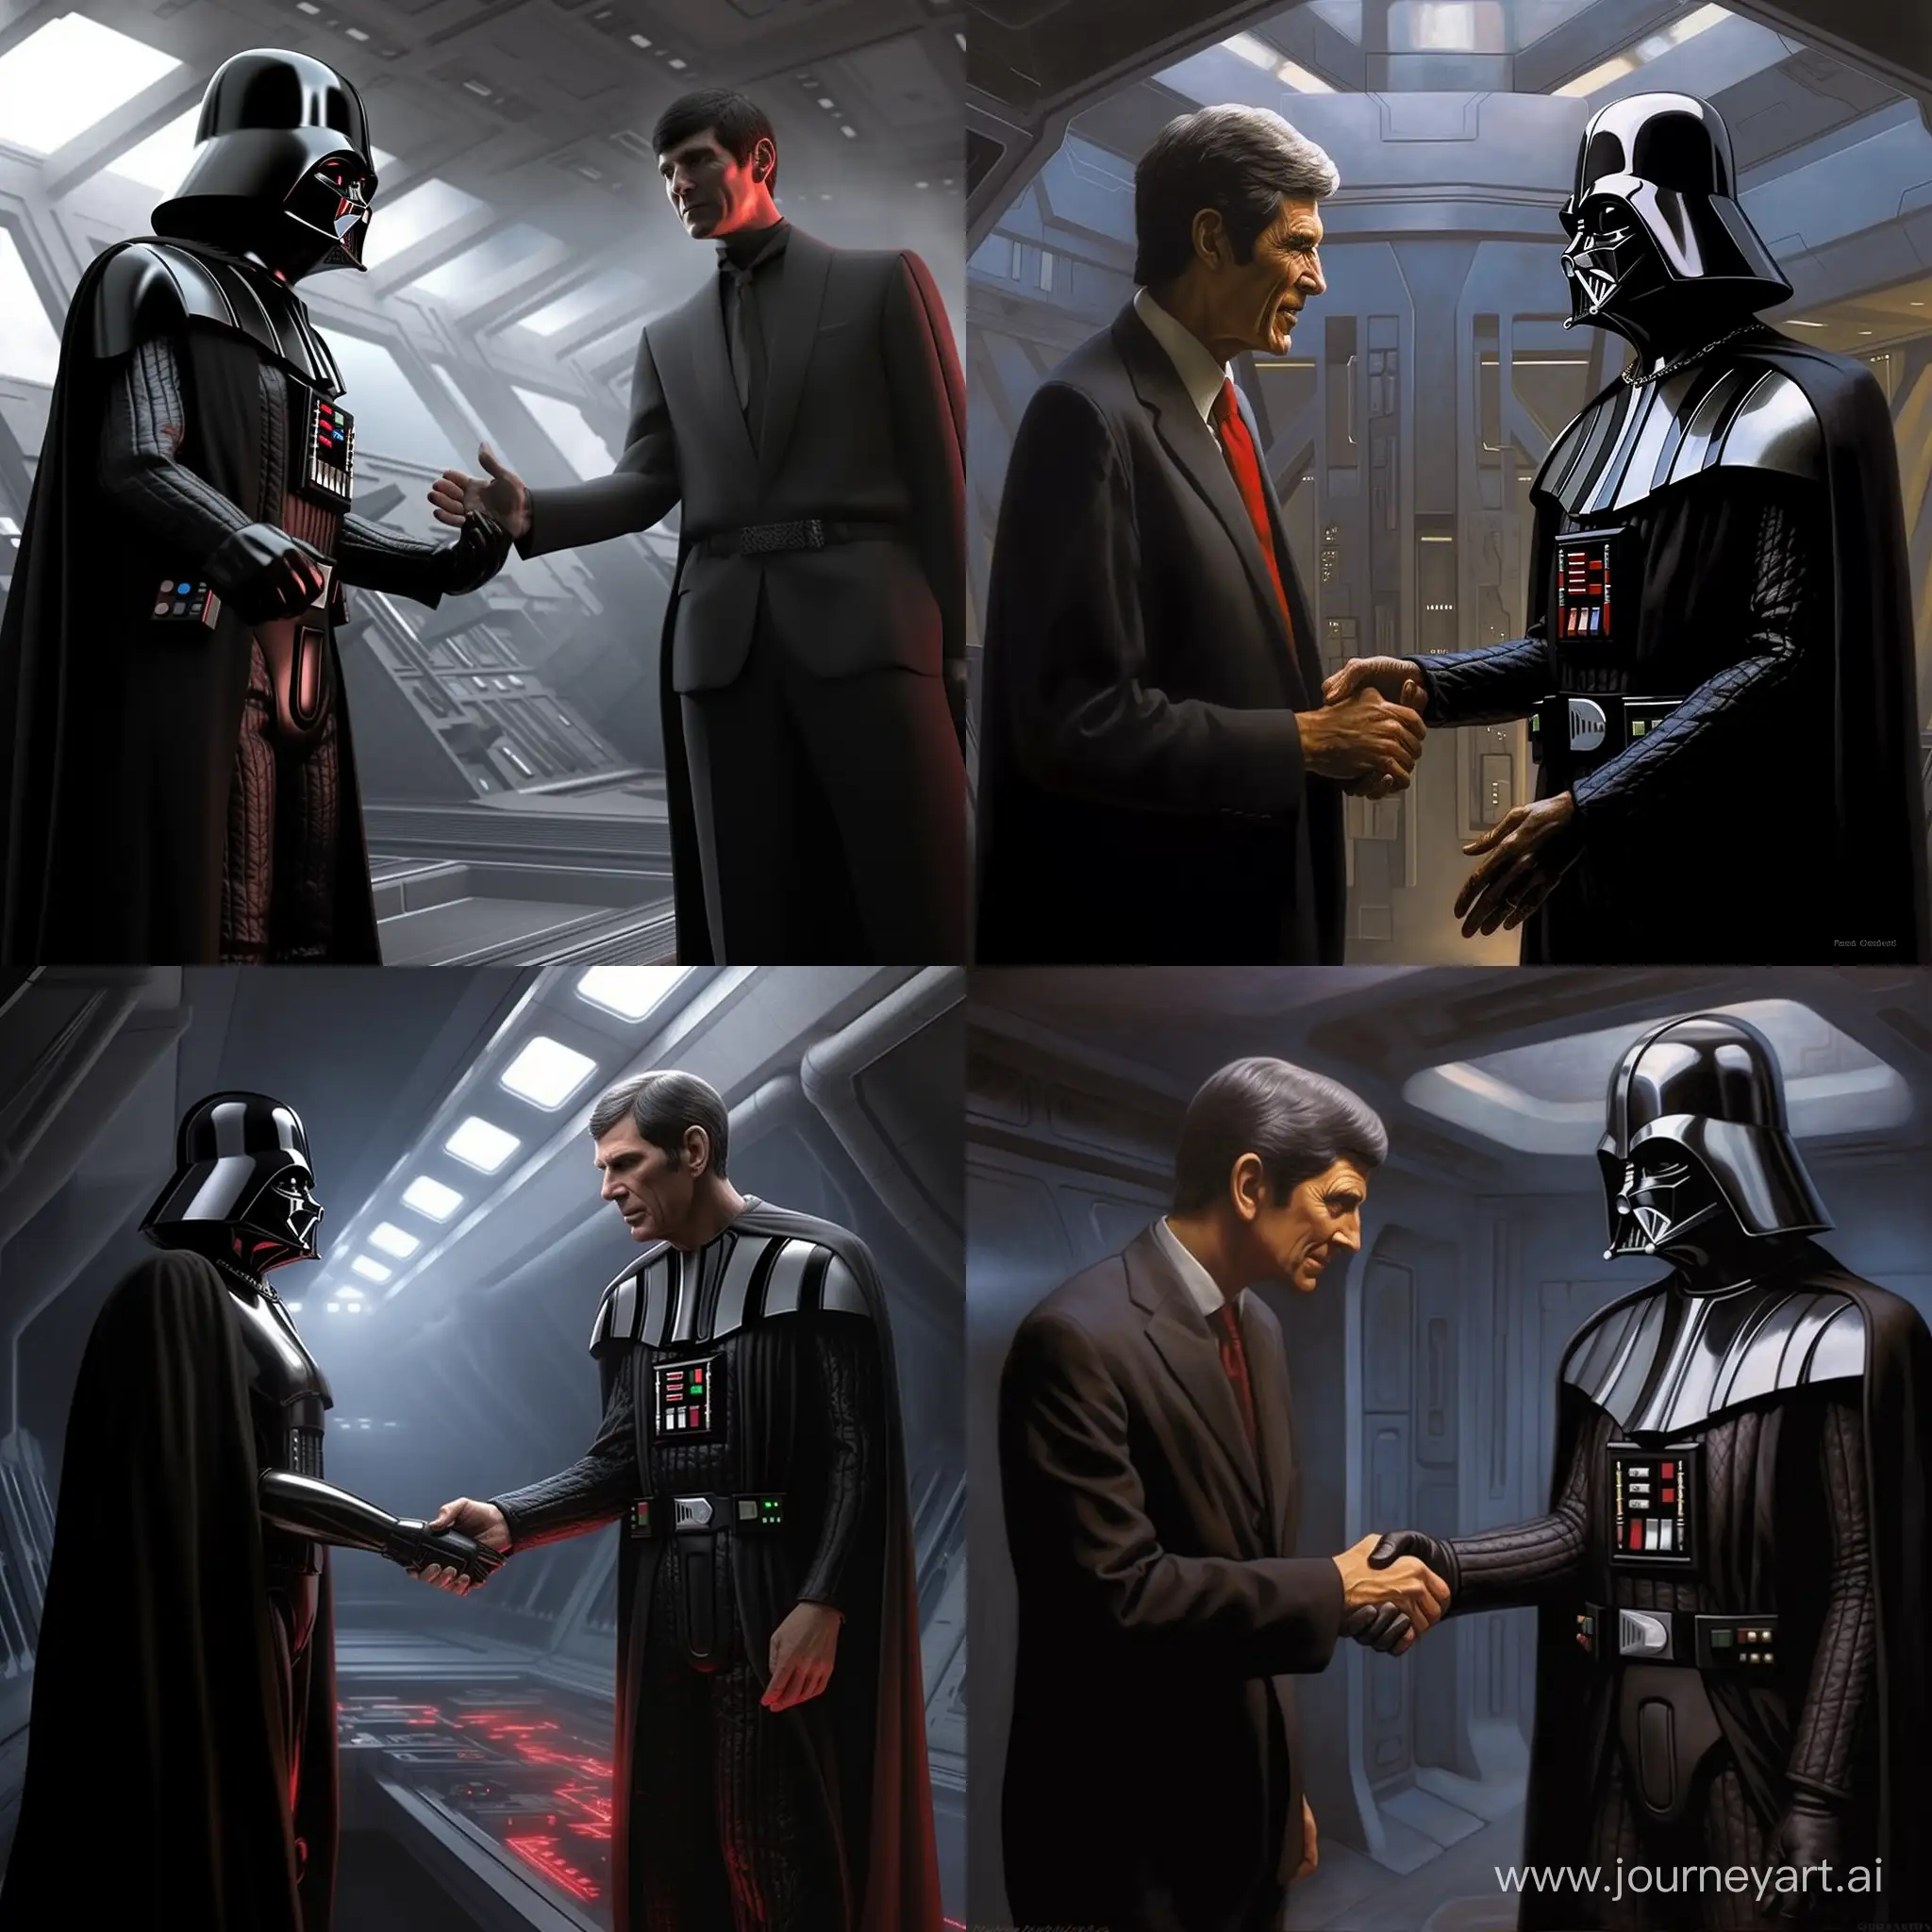 Intergalactic-Encounter-Darth-Vader-Meets-Mr-Spock-on-the-Star-Trek-Enterprise